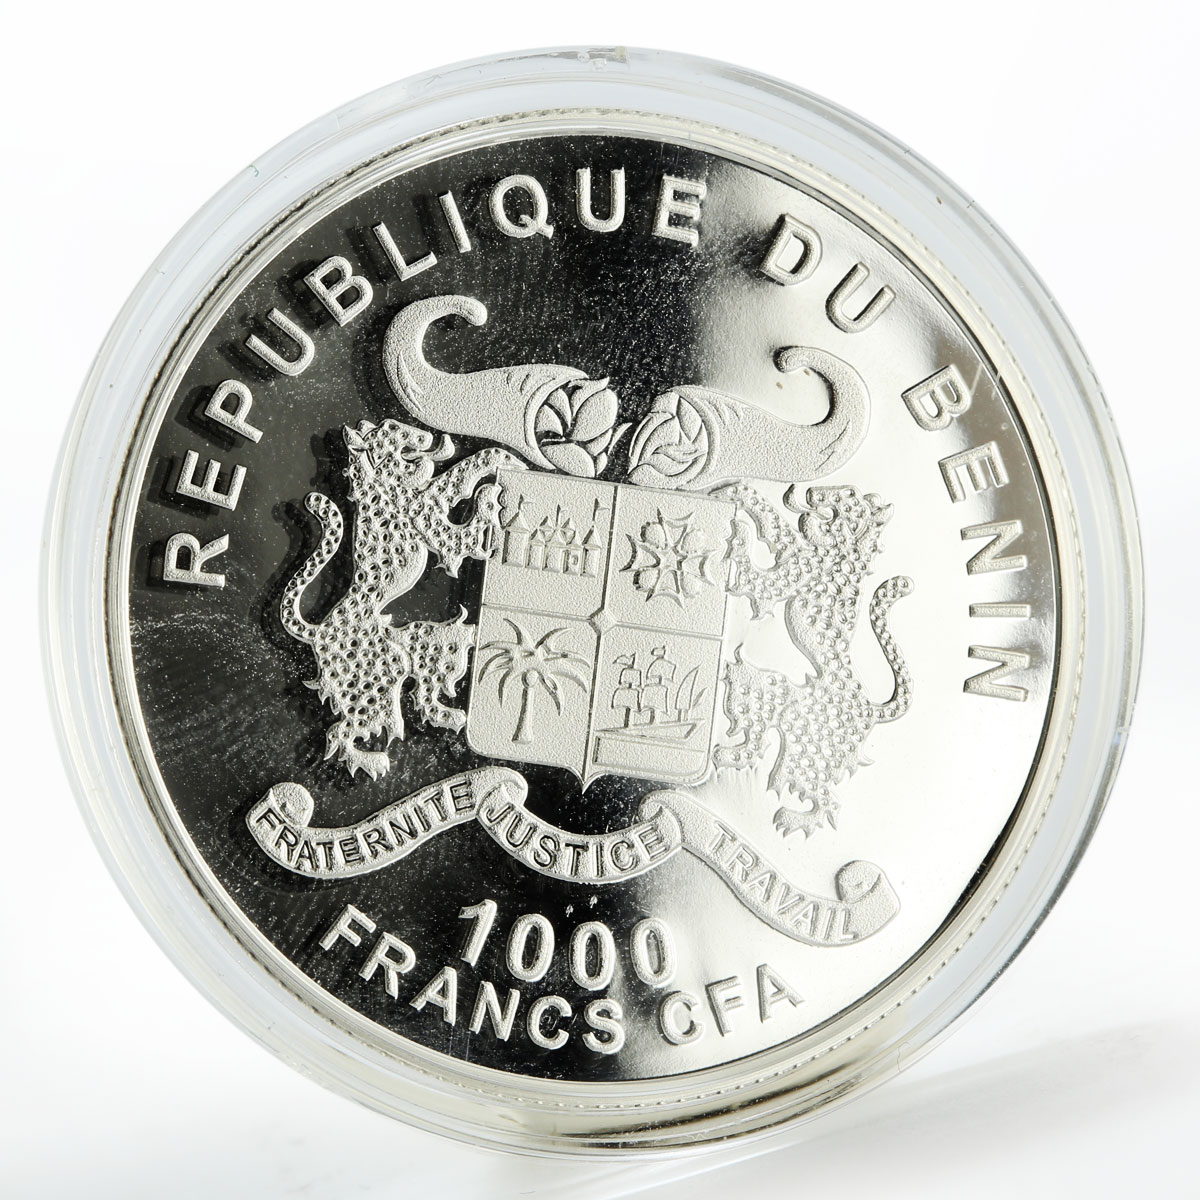 Benin 1000 francs Pomeranian dog colored silver coin 2012